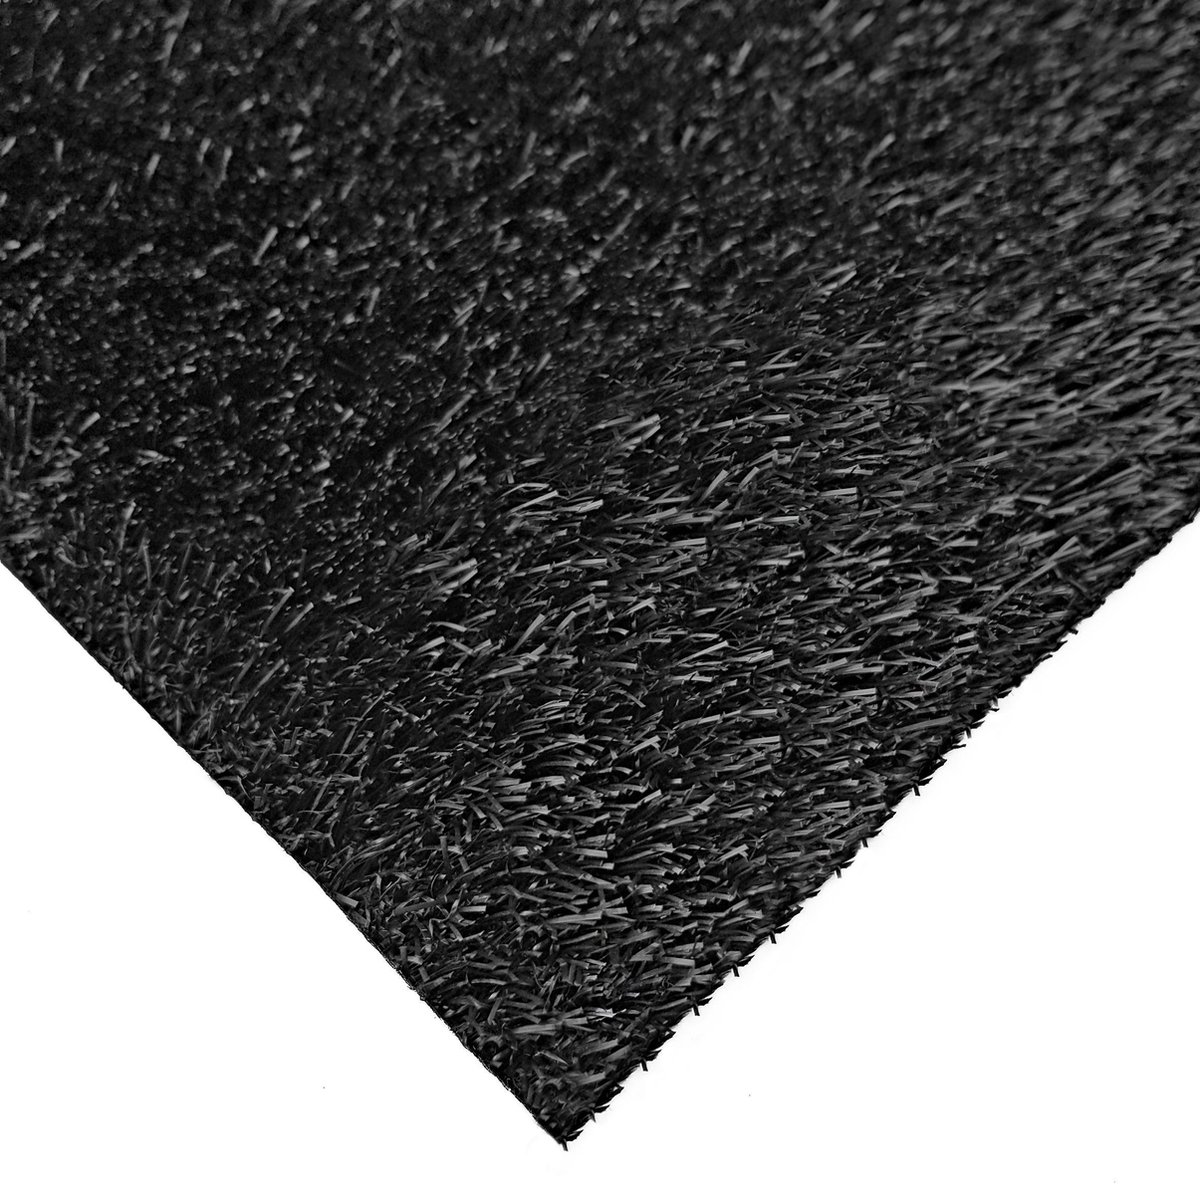 Kunstgras Tapijt RAINBOW Black Shadow - 2x10M - 25mm|artificial grass|gazon artificiel|....|tuin|balkon|terras|kinderkamer|speelkamer|grastapijt|grasmat|buiten|binnen|kerst